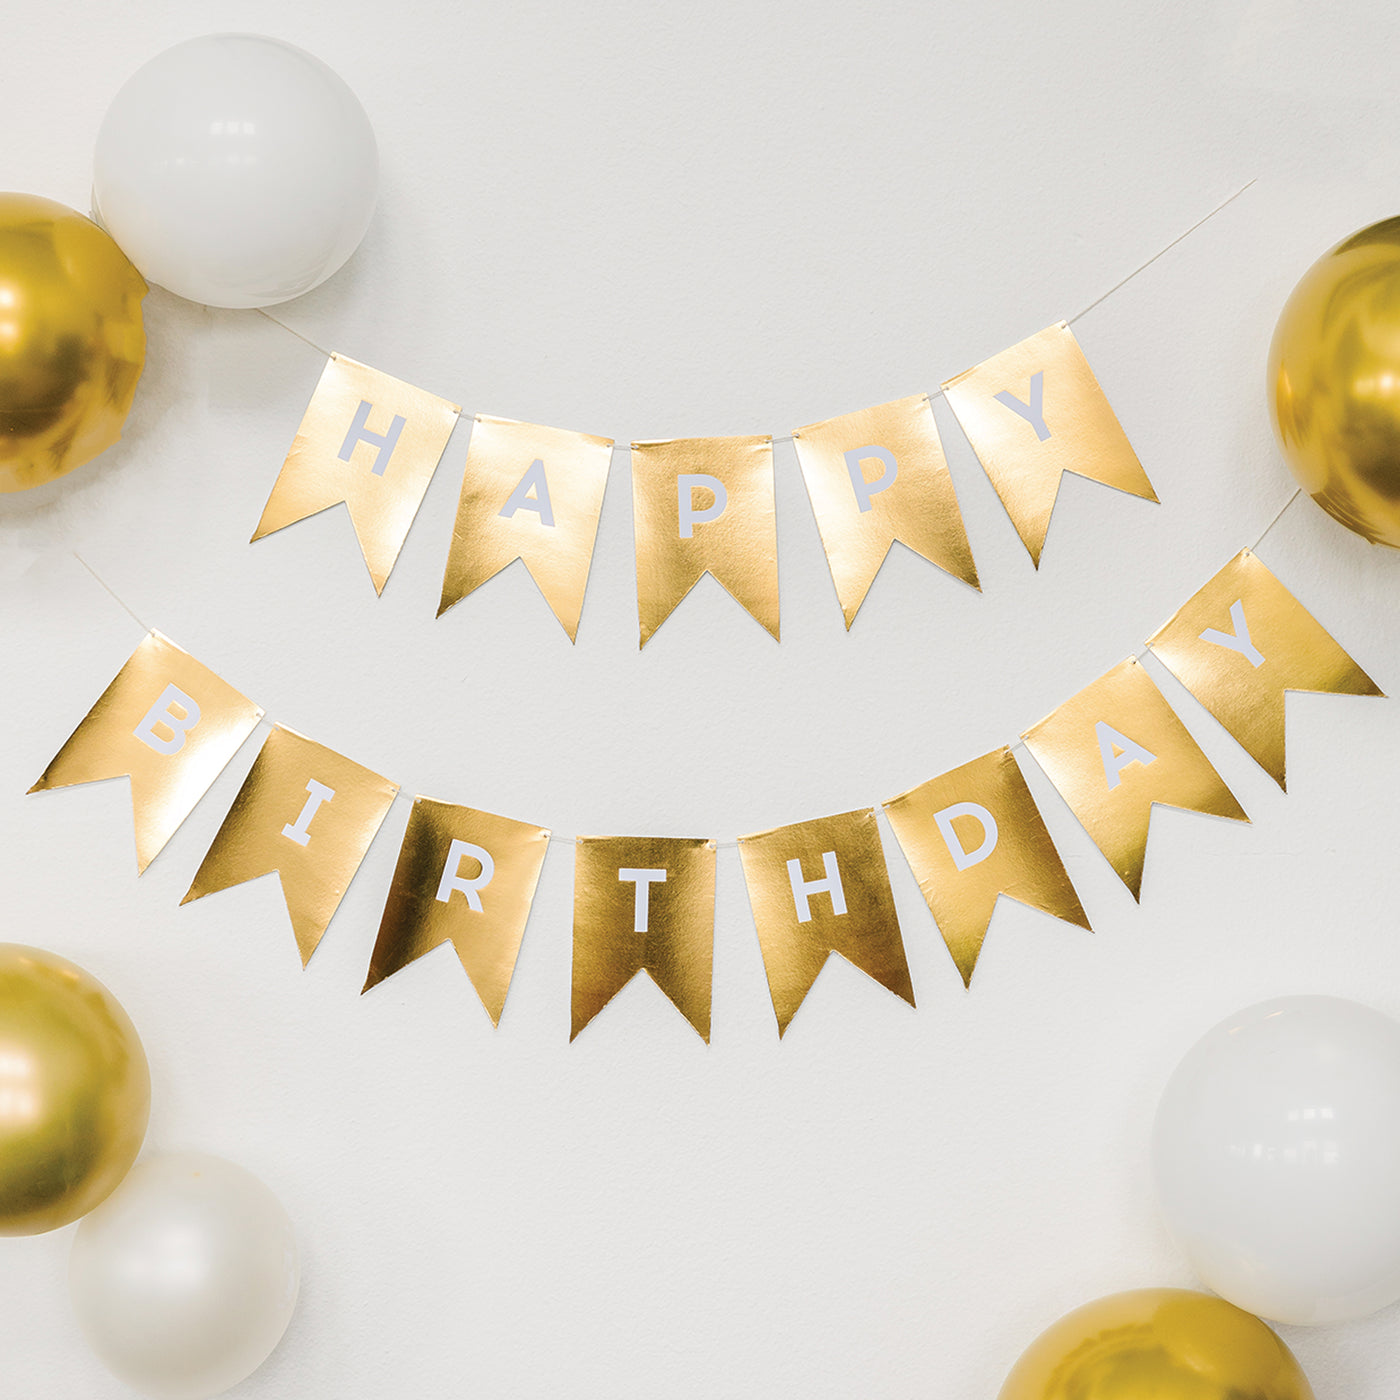 PLHBD02 - Gold Foil "HAPPY BIRTHDAY" Word Banner